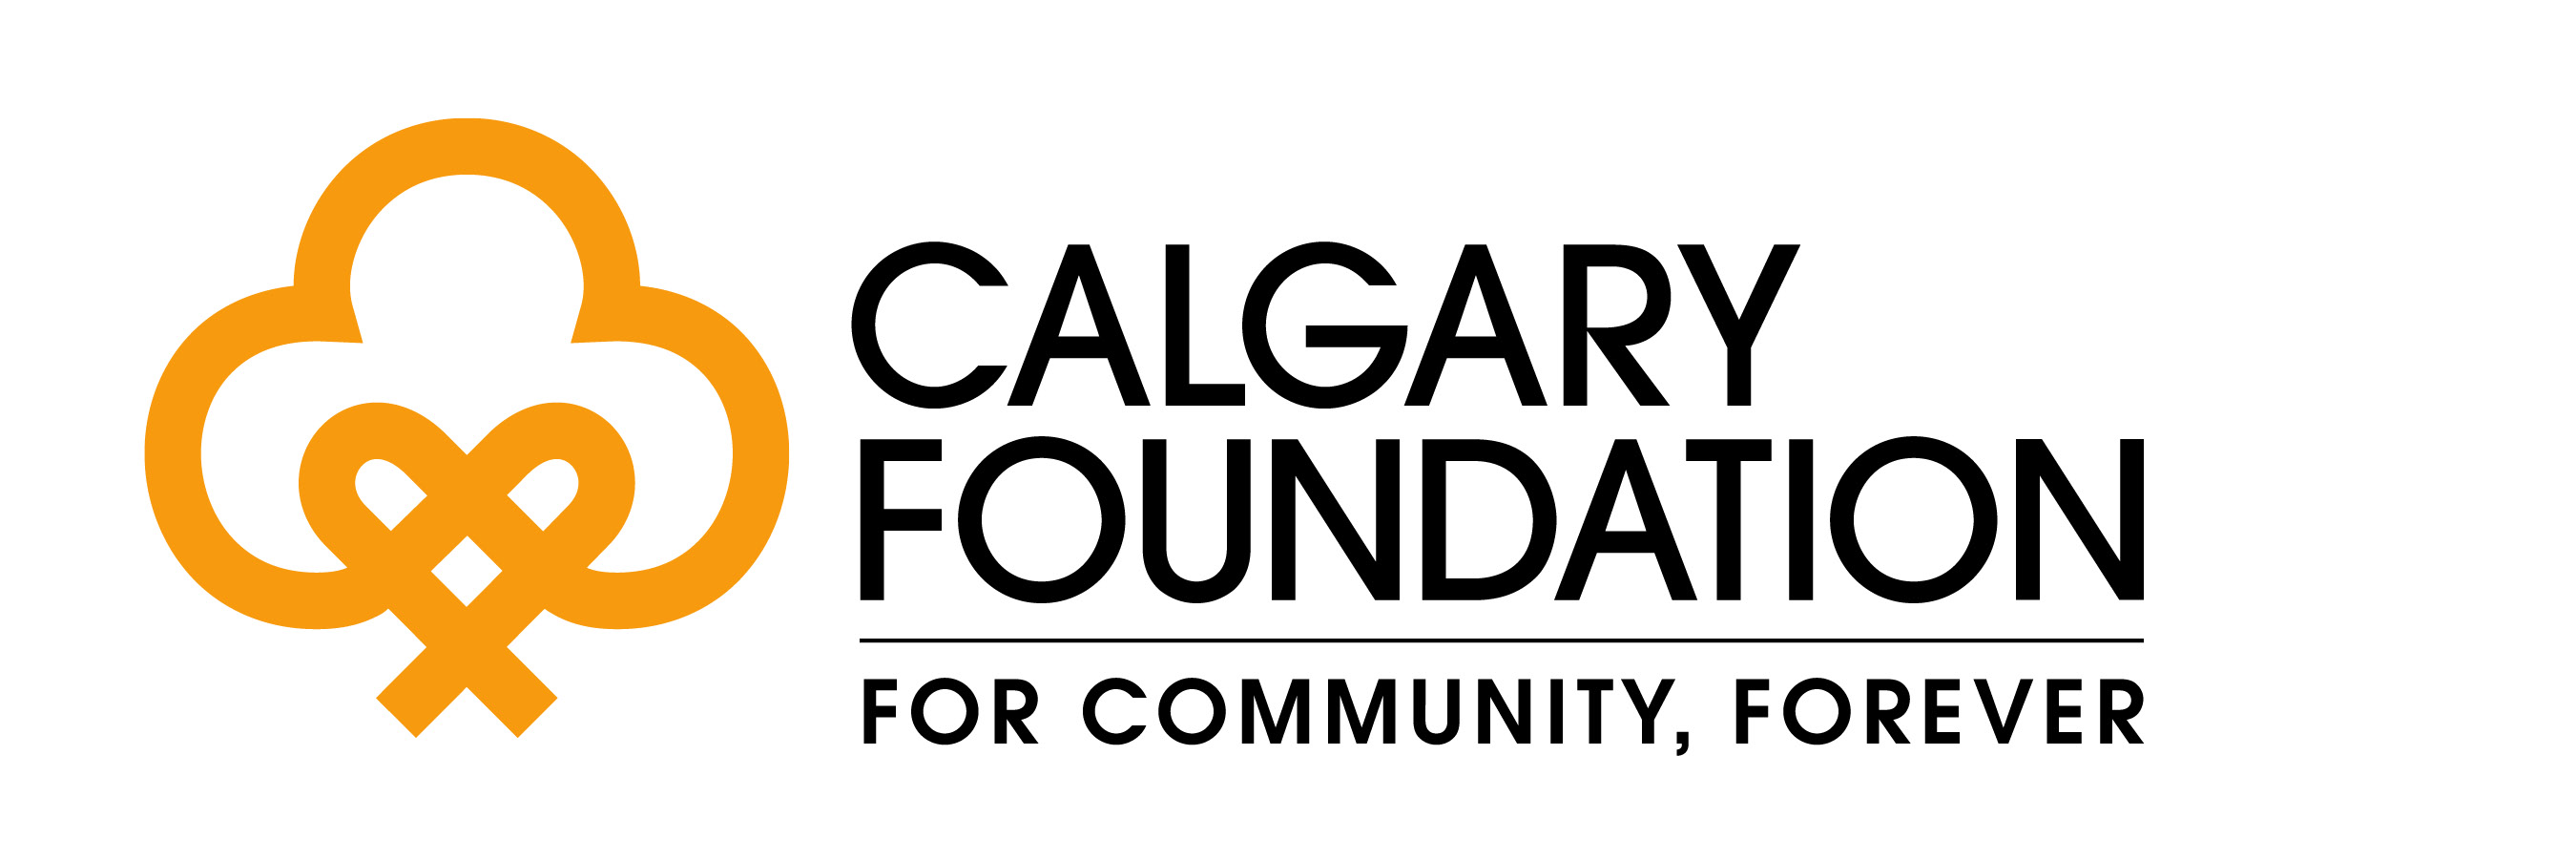 calgary foundation logo LARGER tagline CMYK